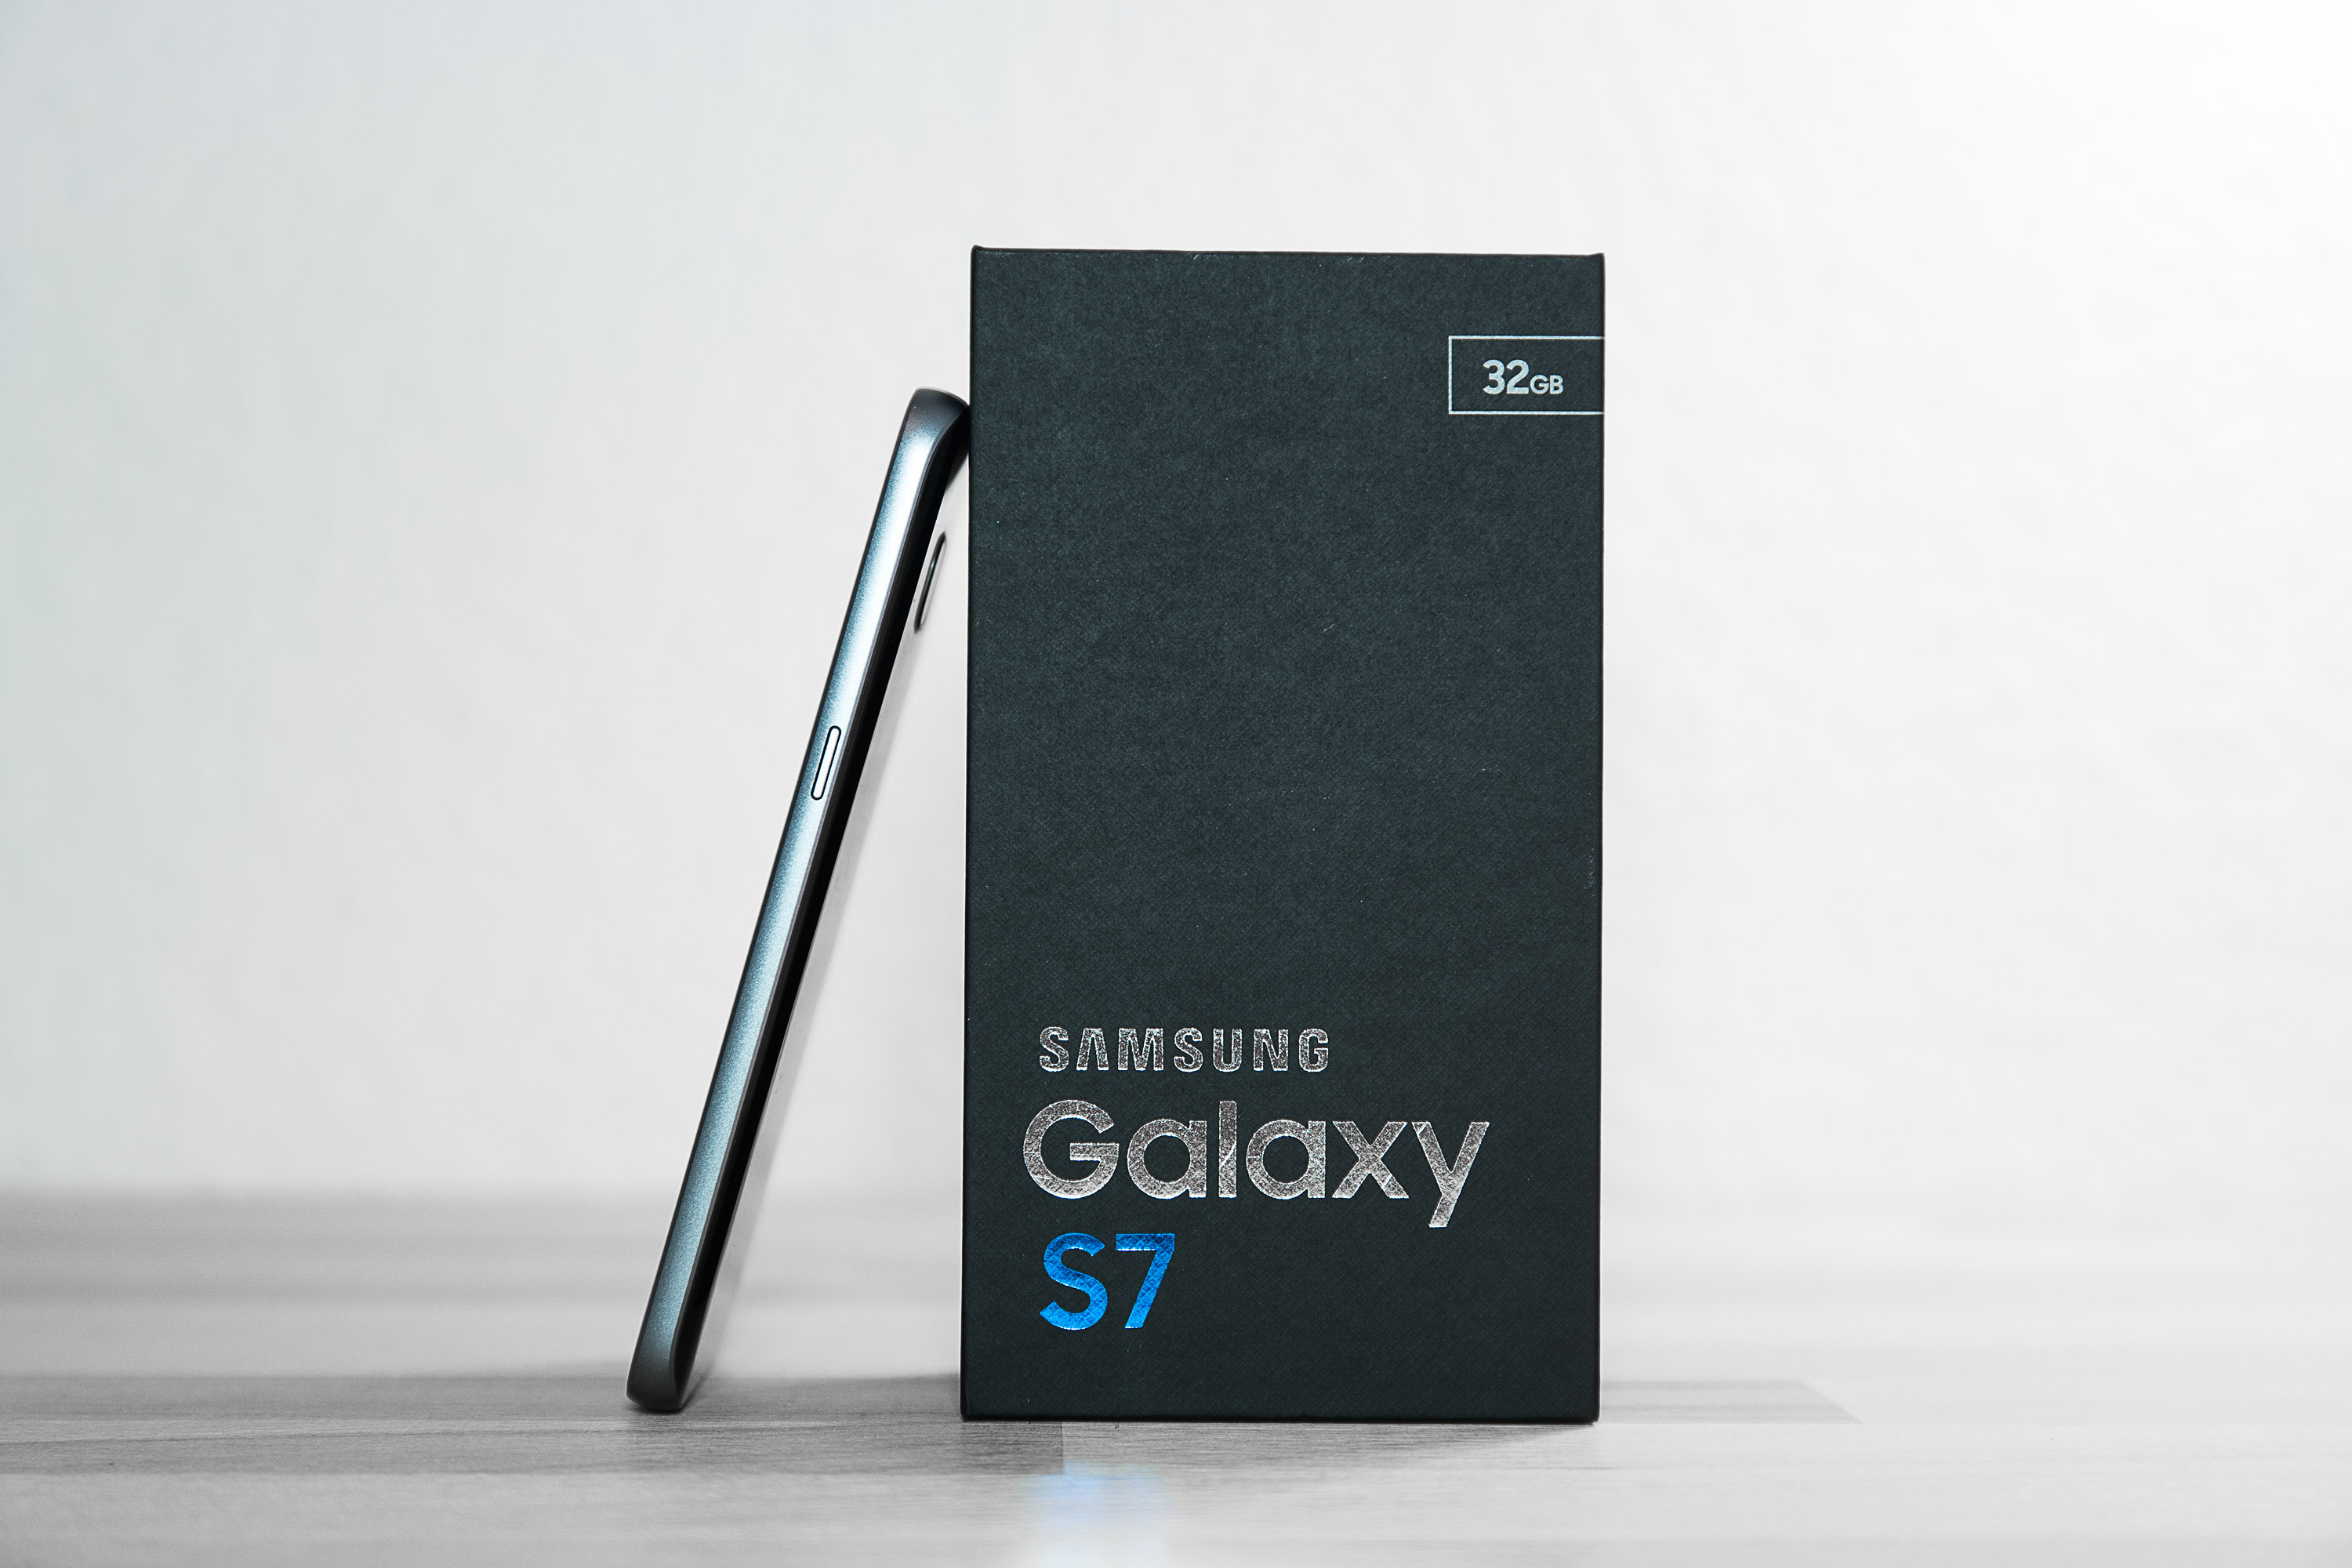 SamsungGalaxyS7_Test_3.jpg